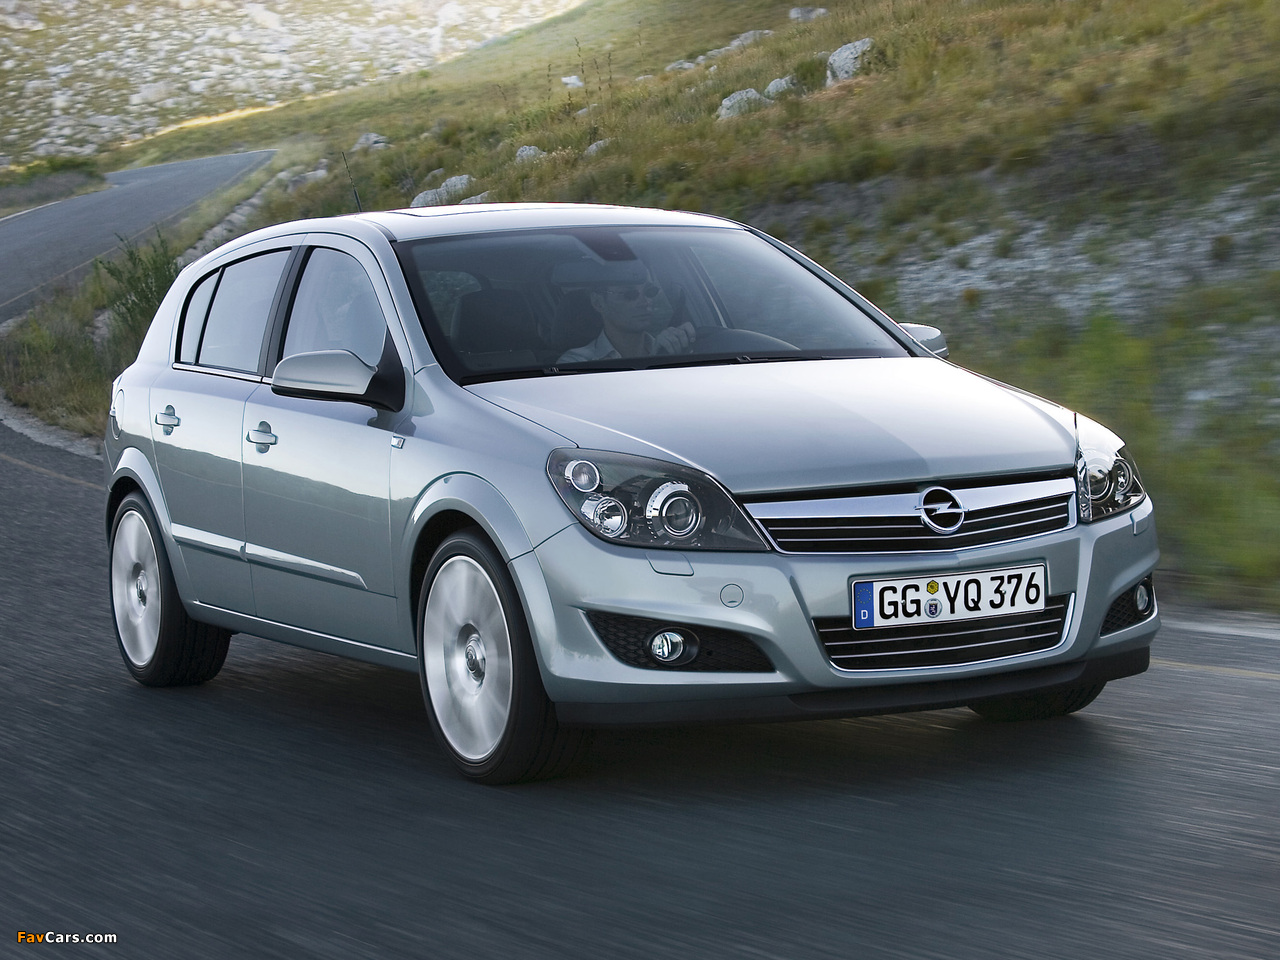 Opel Astra Hatchback (H) 2007 photos (1280 x 960)